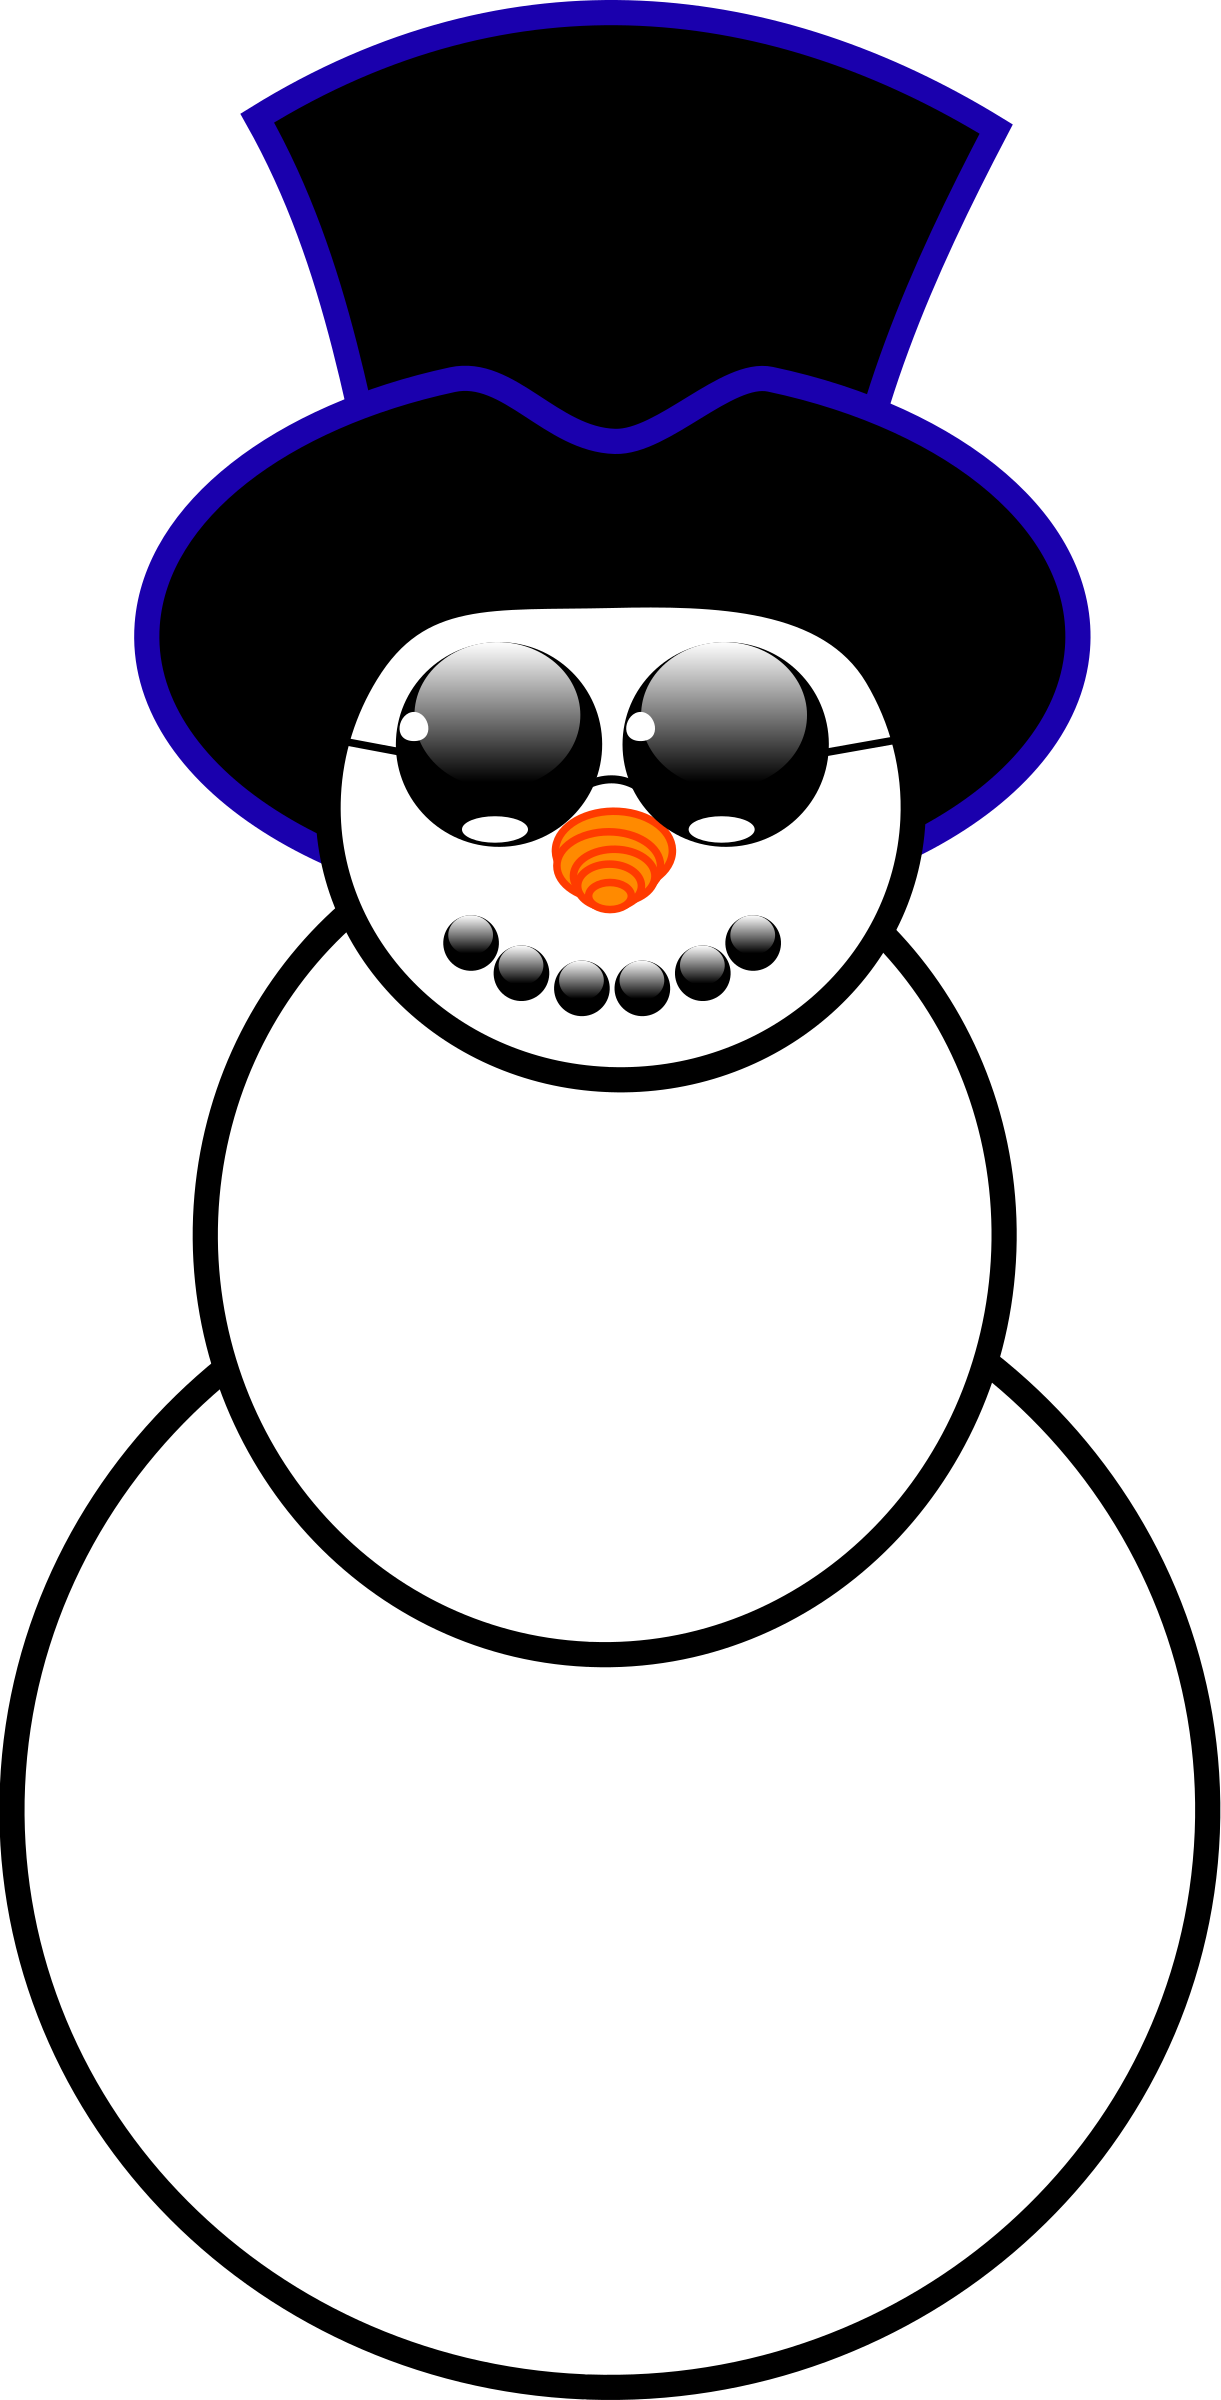 Download Snowman Vector Art image - Free stock photo - Public ...